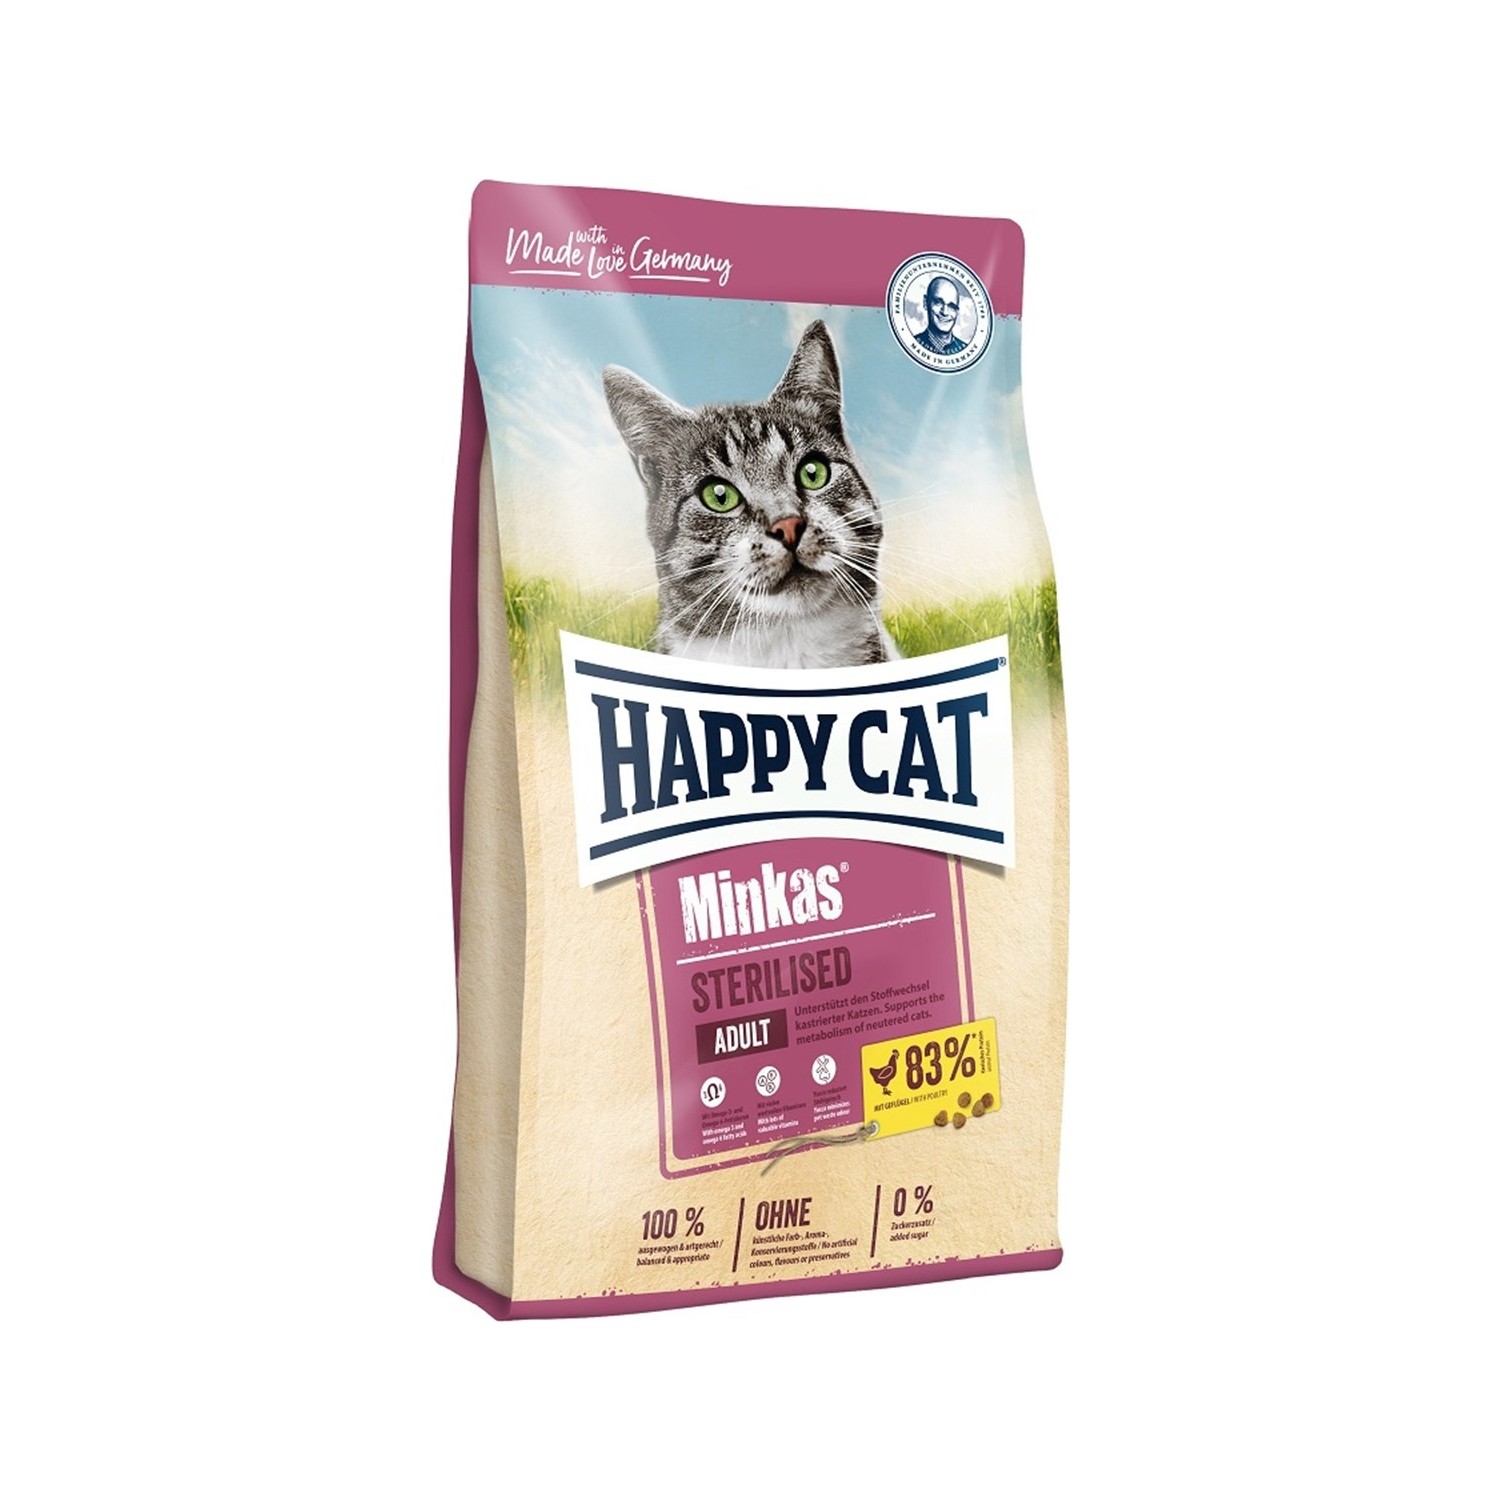 Happy Cat Minkas Sterilised Kısır Kedi Maması 10 kg Fiyatı